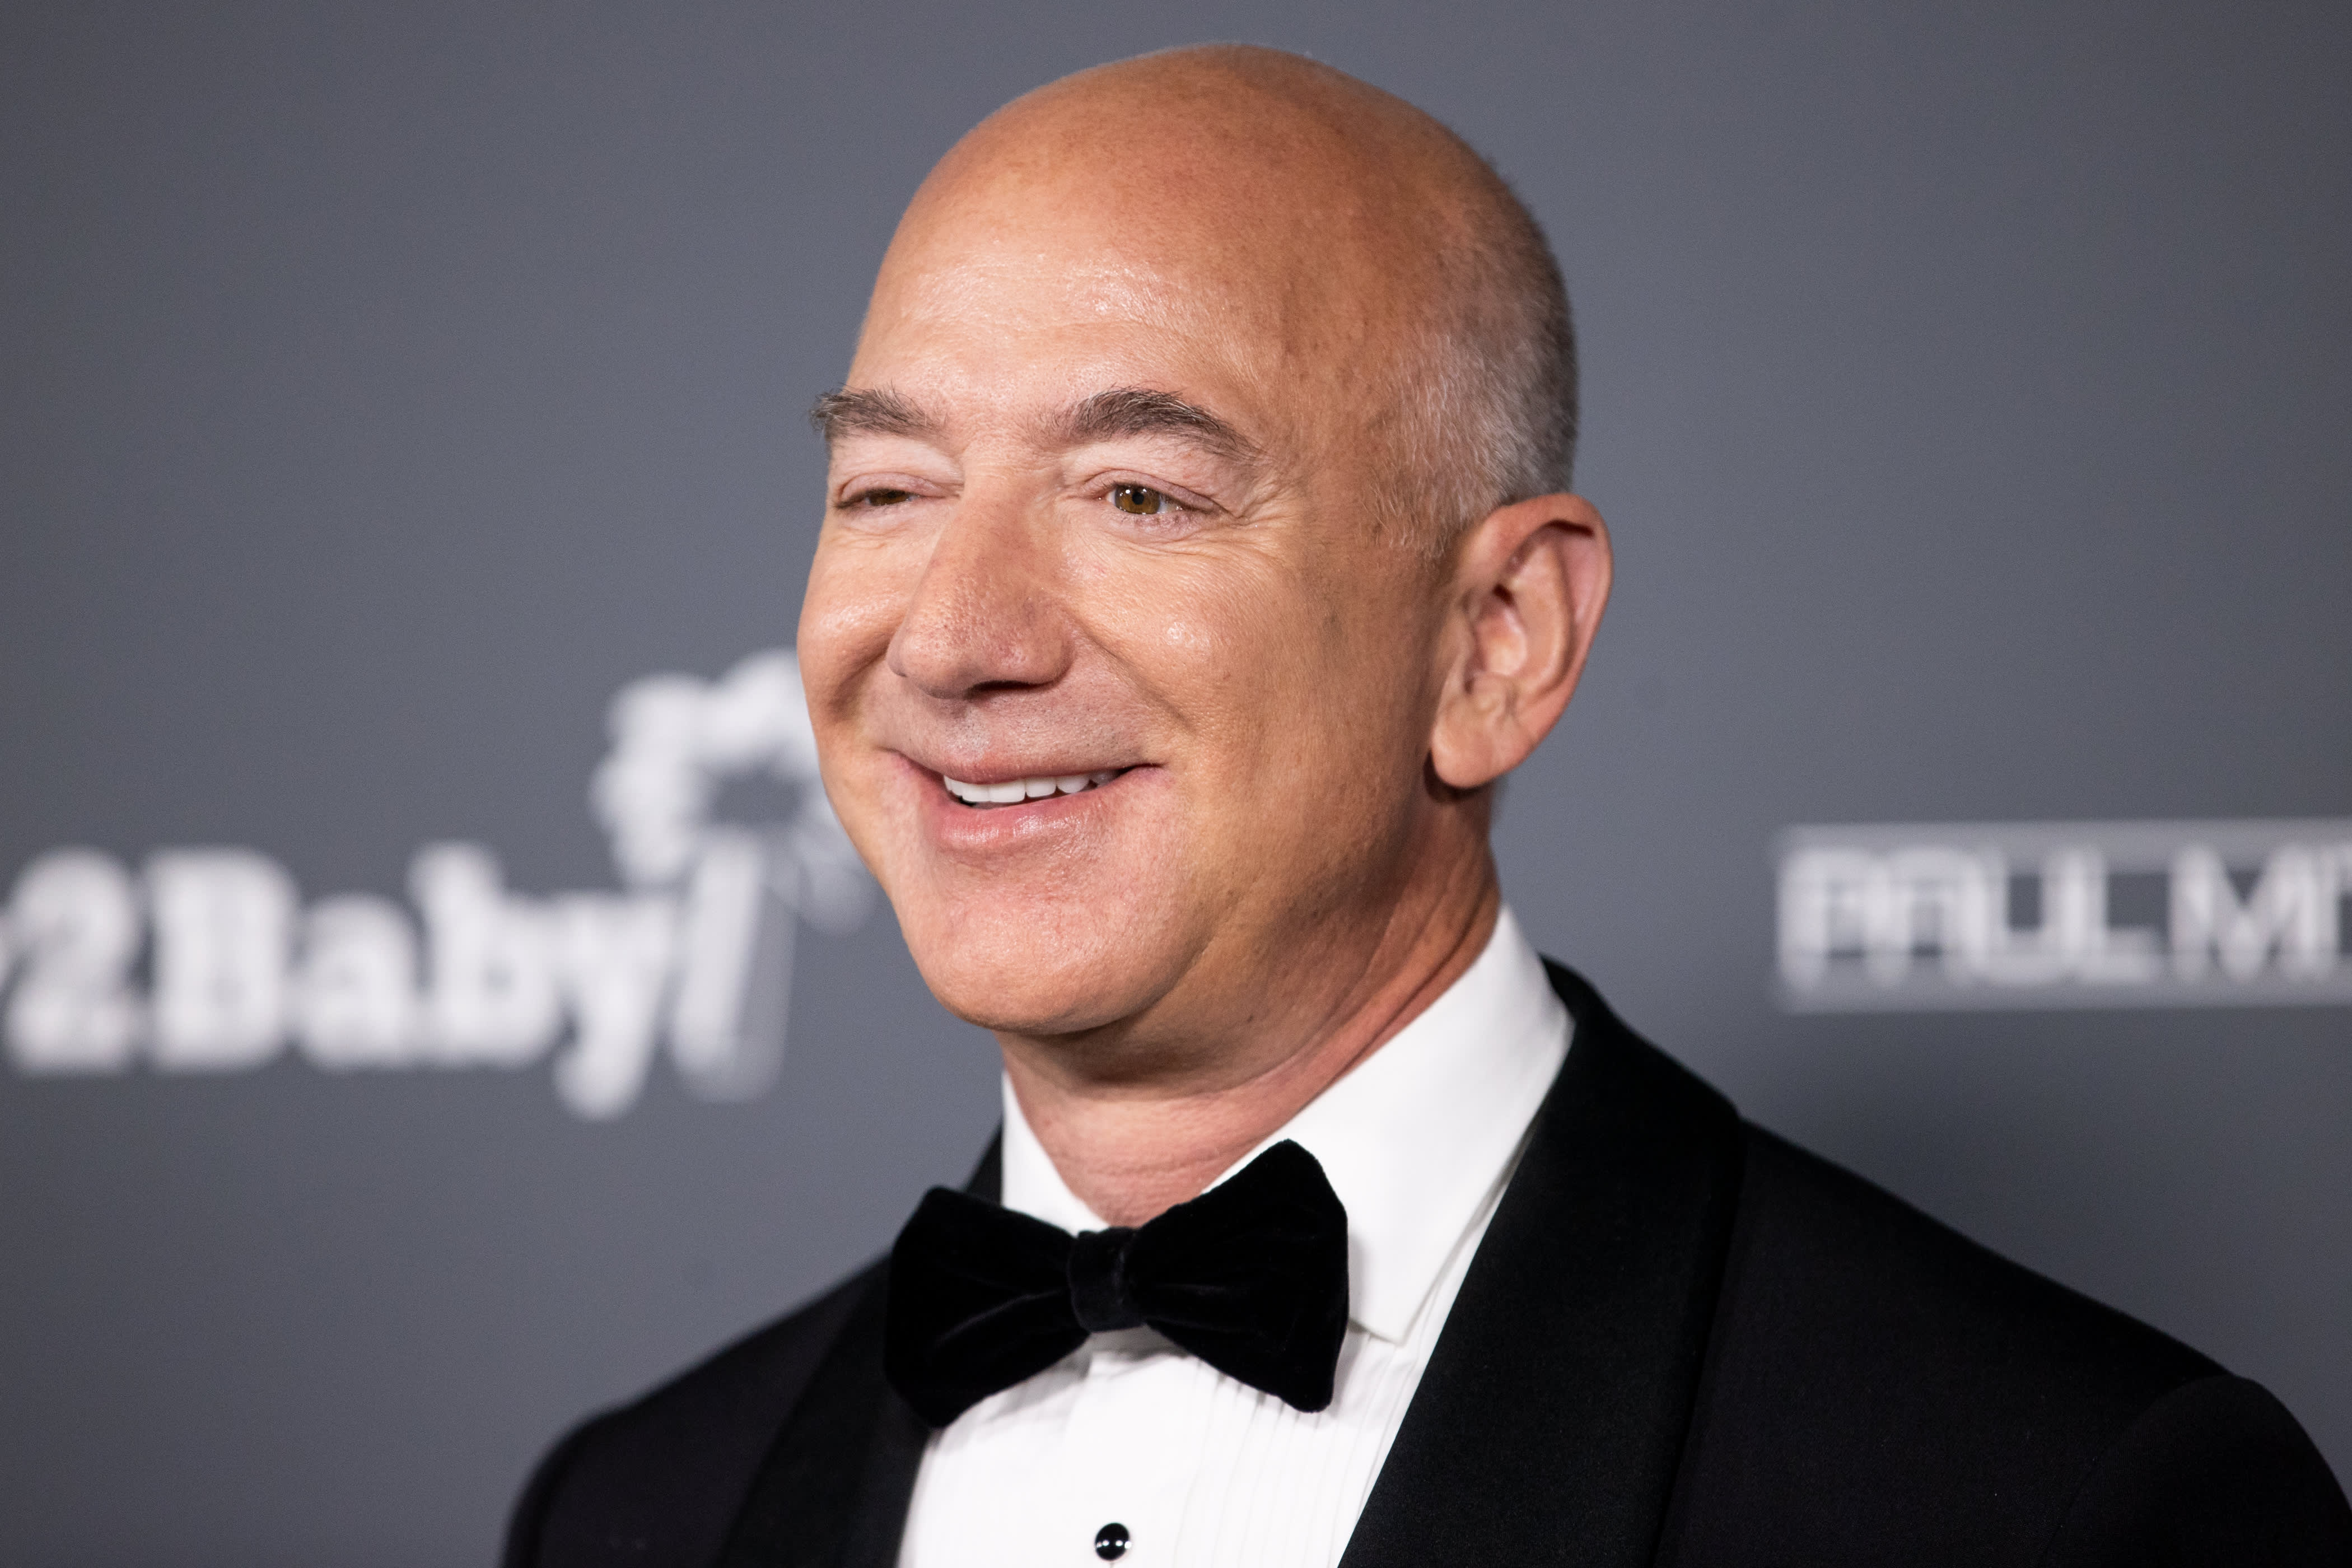 Jeff Bezos Net Worth - Billions Of The Founder Of Amazon